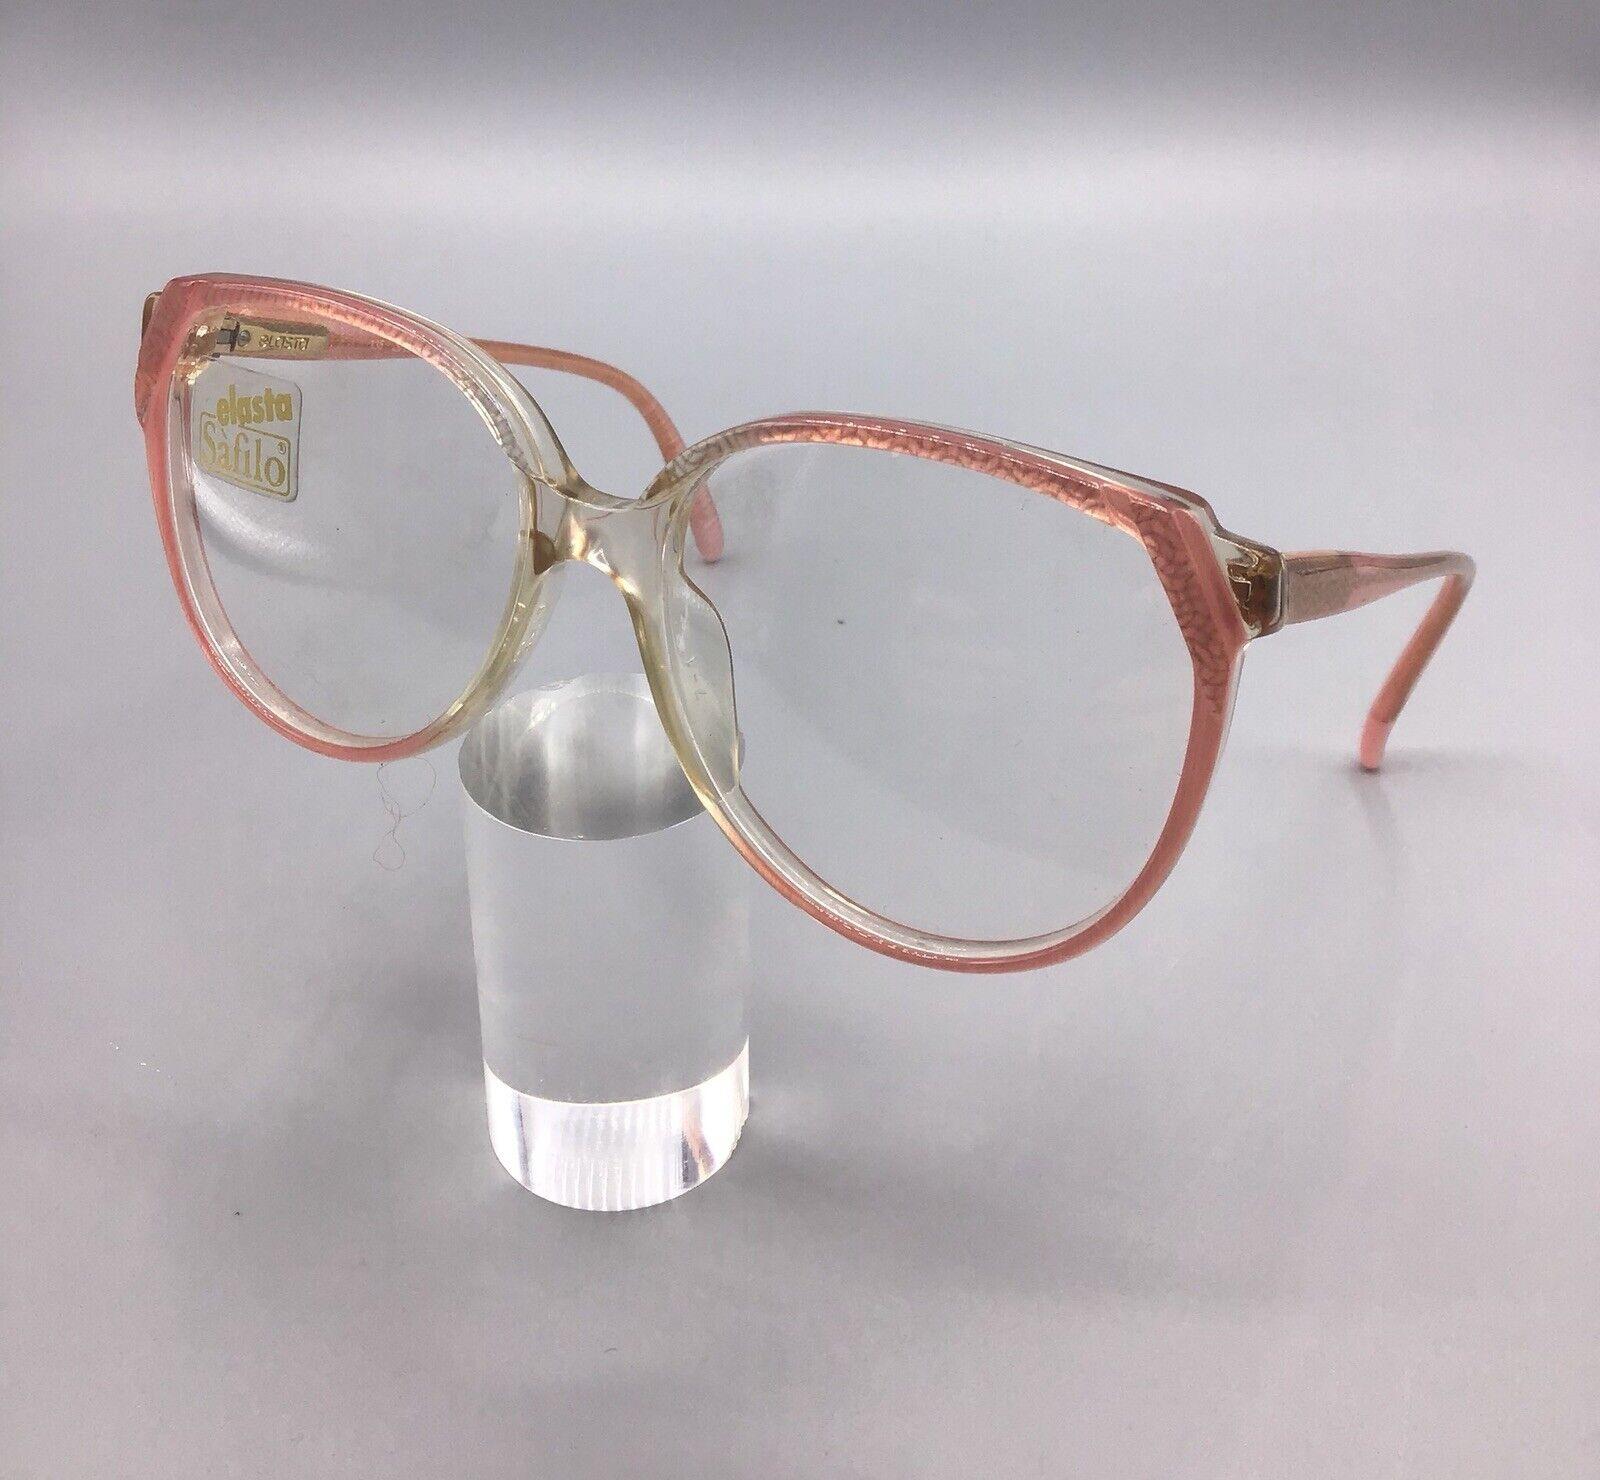 Safilo elasta L 644 occhiale vintage eyewear frame italy brillen lunettes